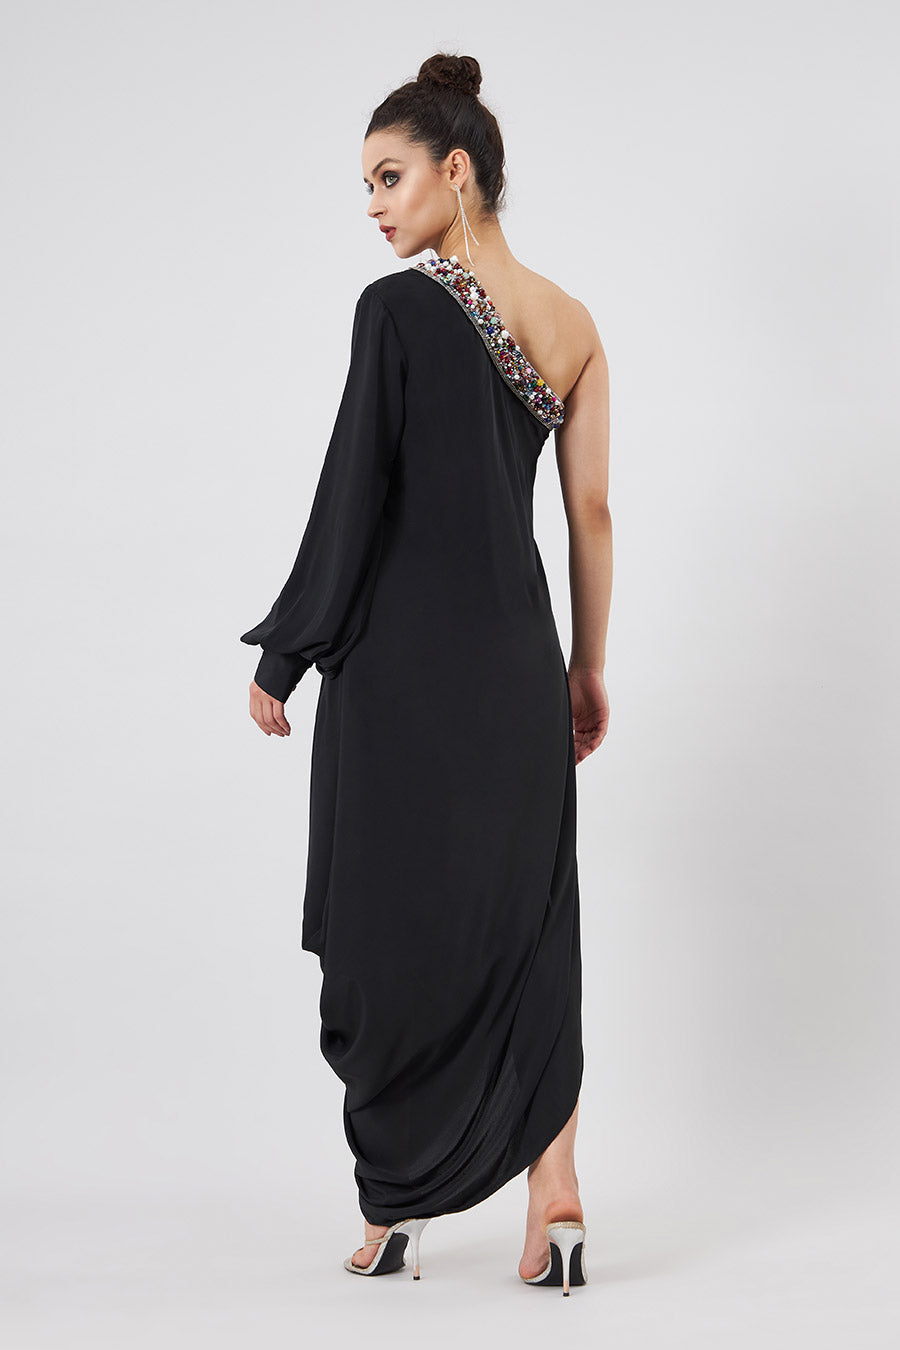 Black Embellished Cowl Draped Dress